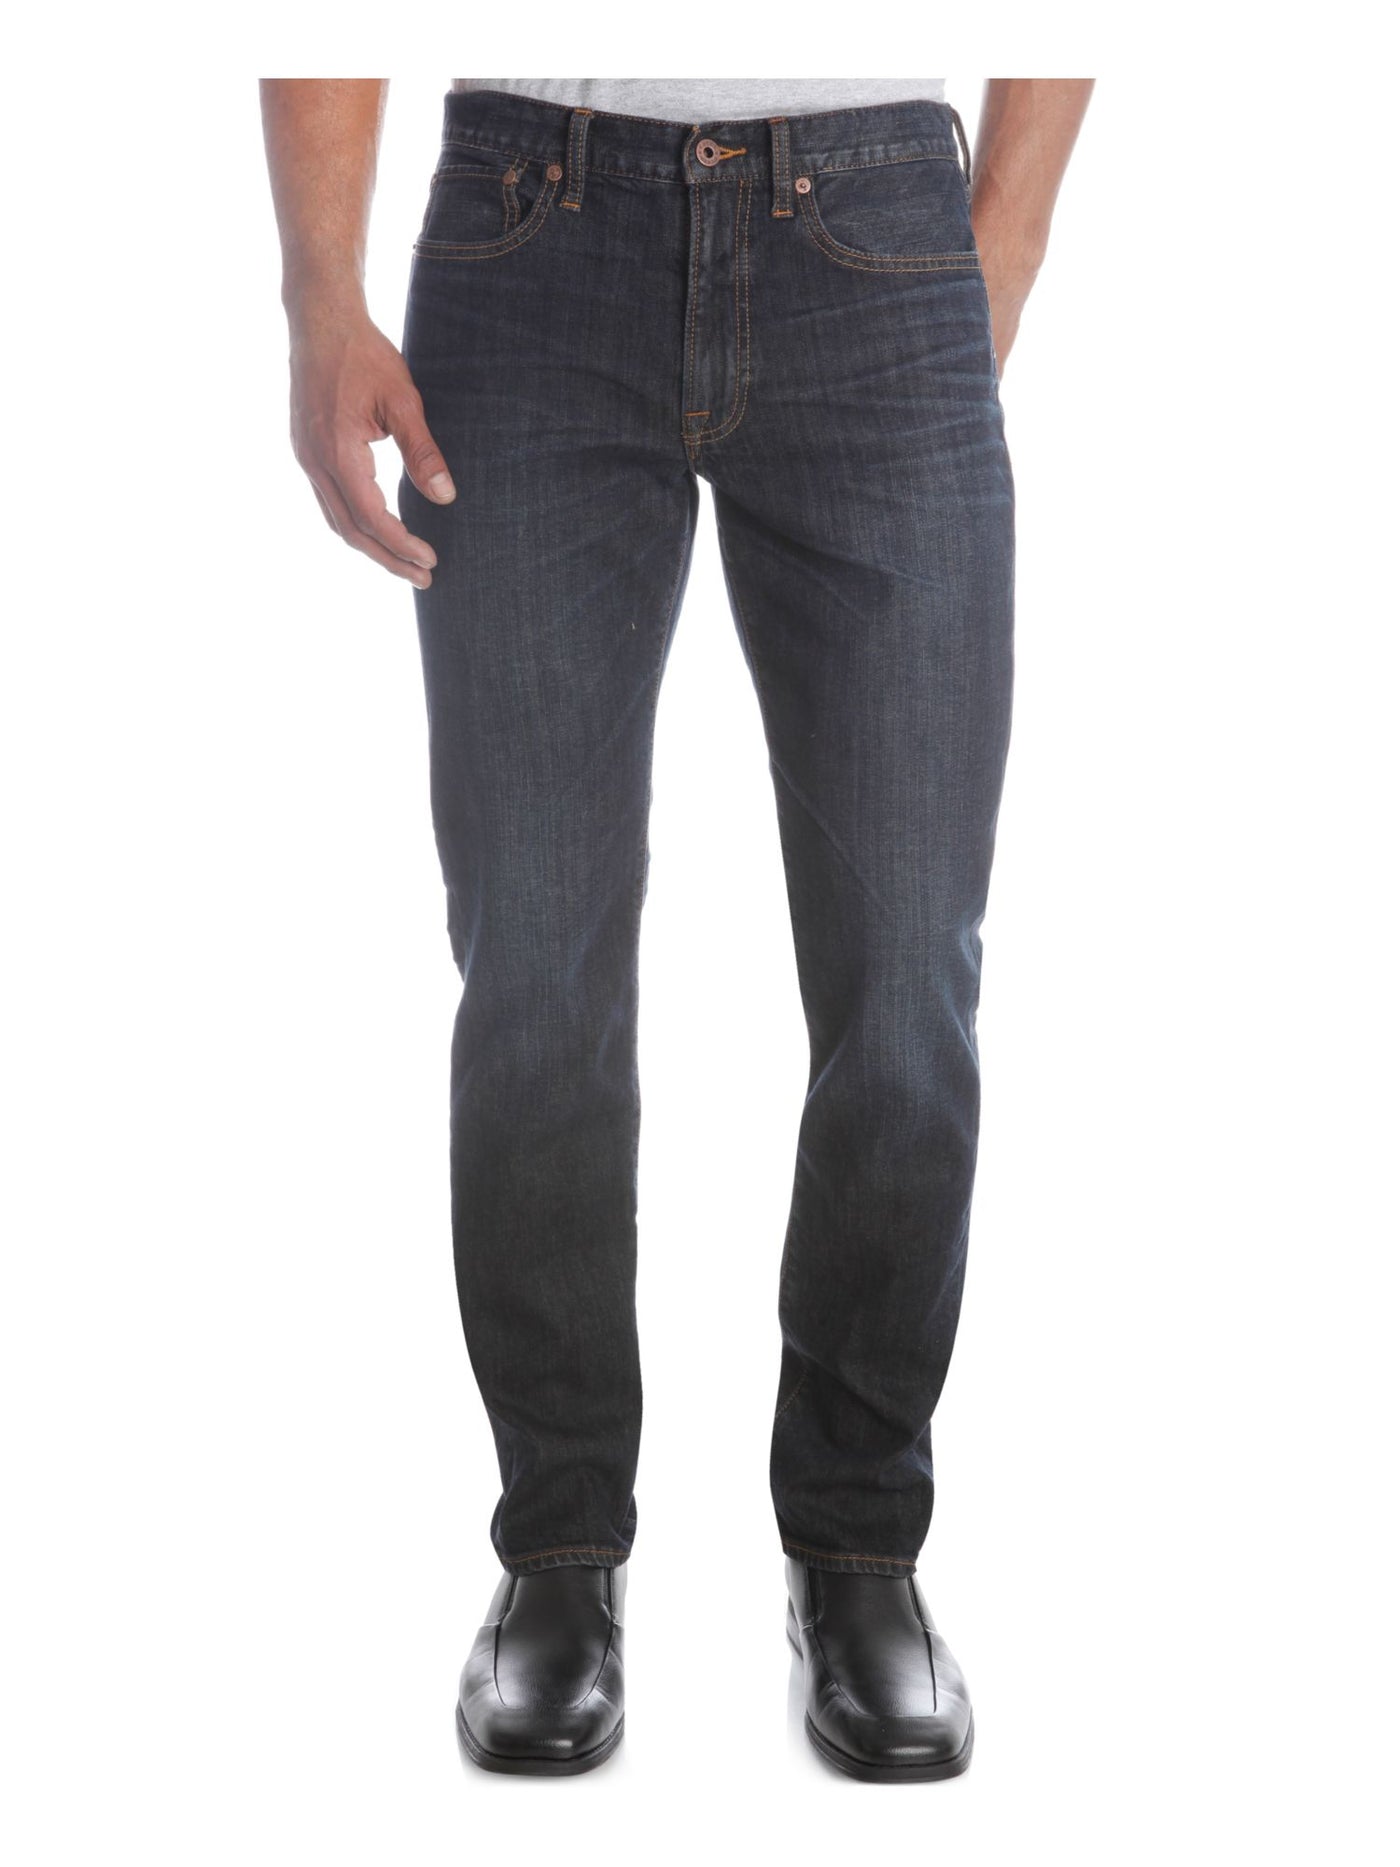 LUCKY BRAND Mens Navy Straight Leg, Classic Fit Denim Jeans W34/ L32